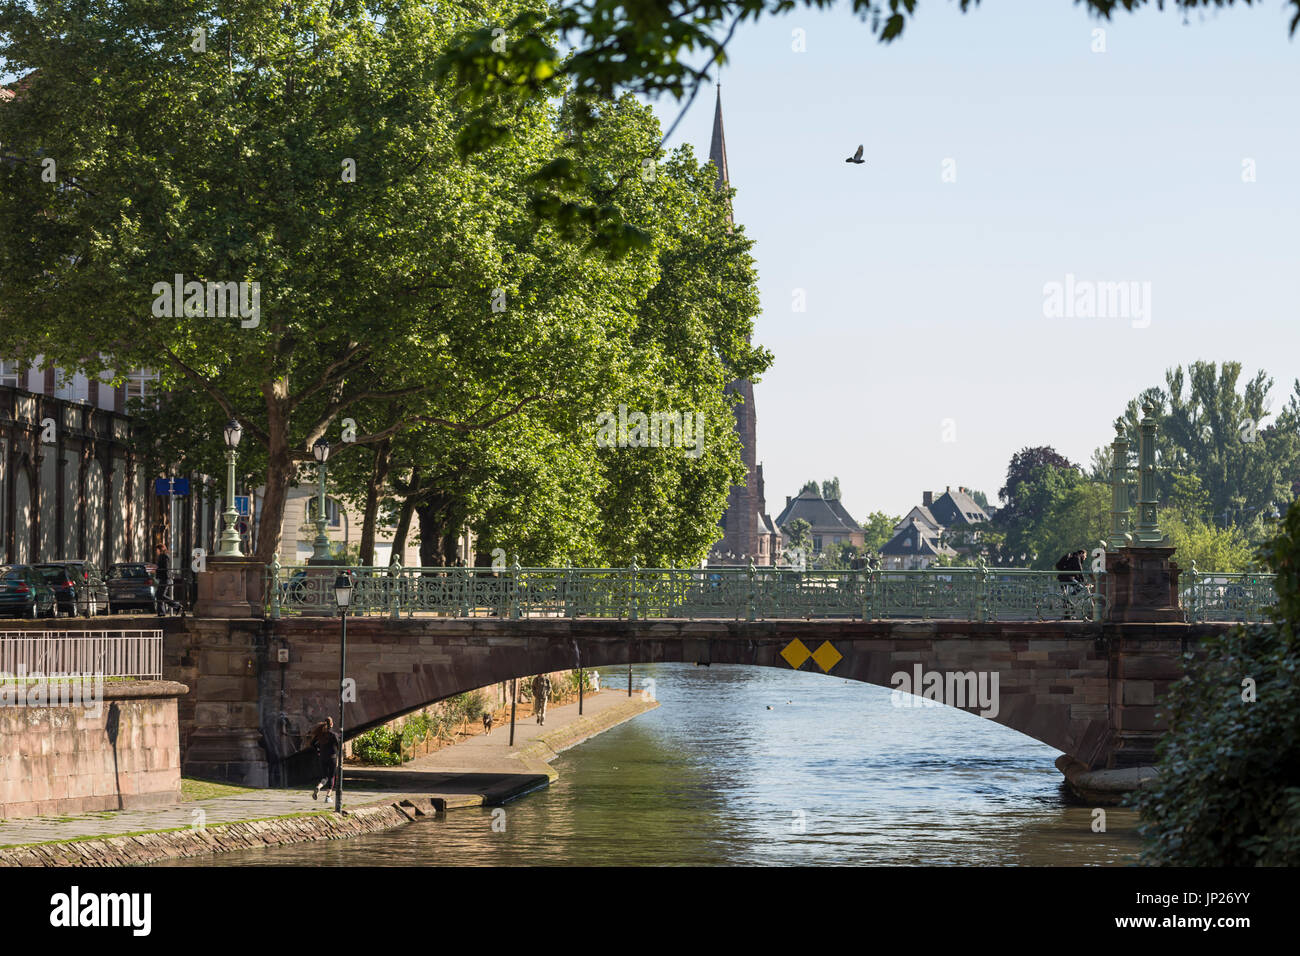 Strasbourg, Alsace, France - May 3, 2014: Bridge over the river Ill in Strasbourg, France Stock Photo